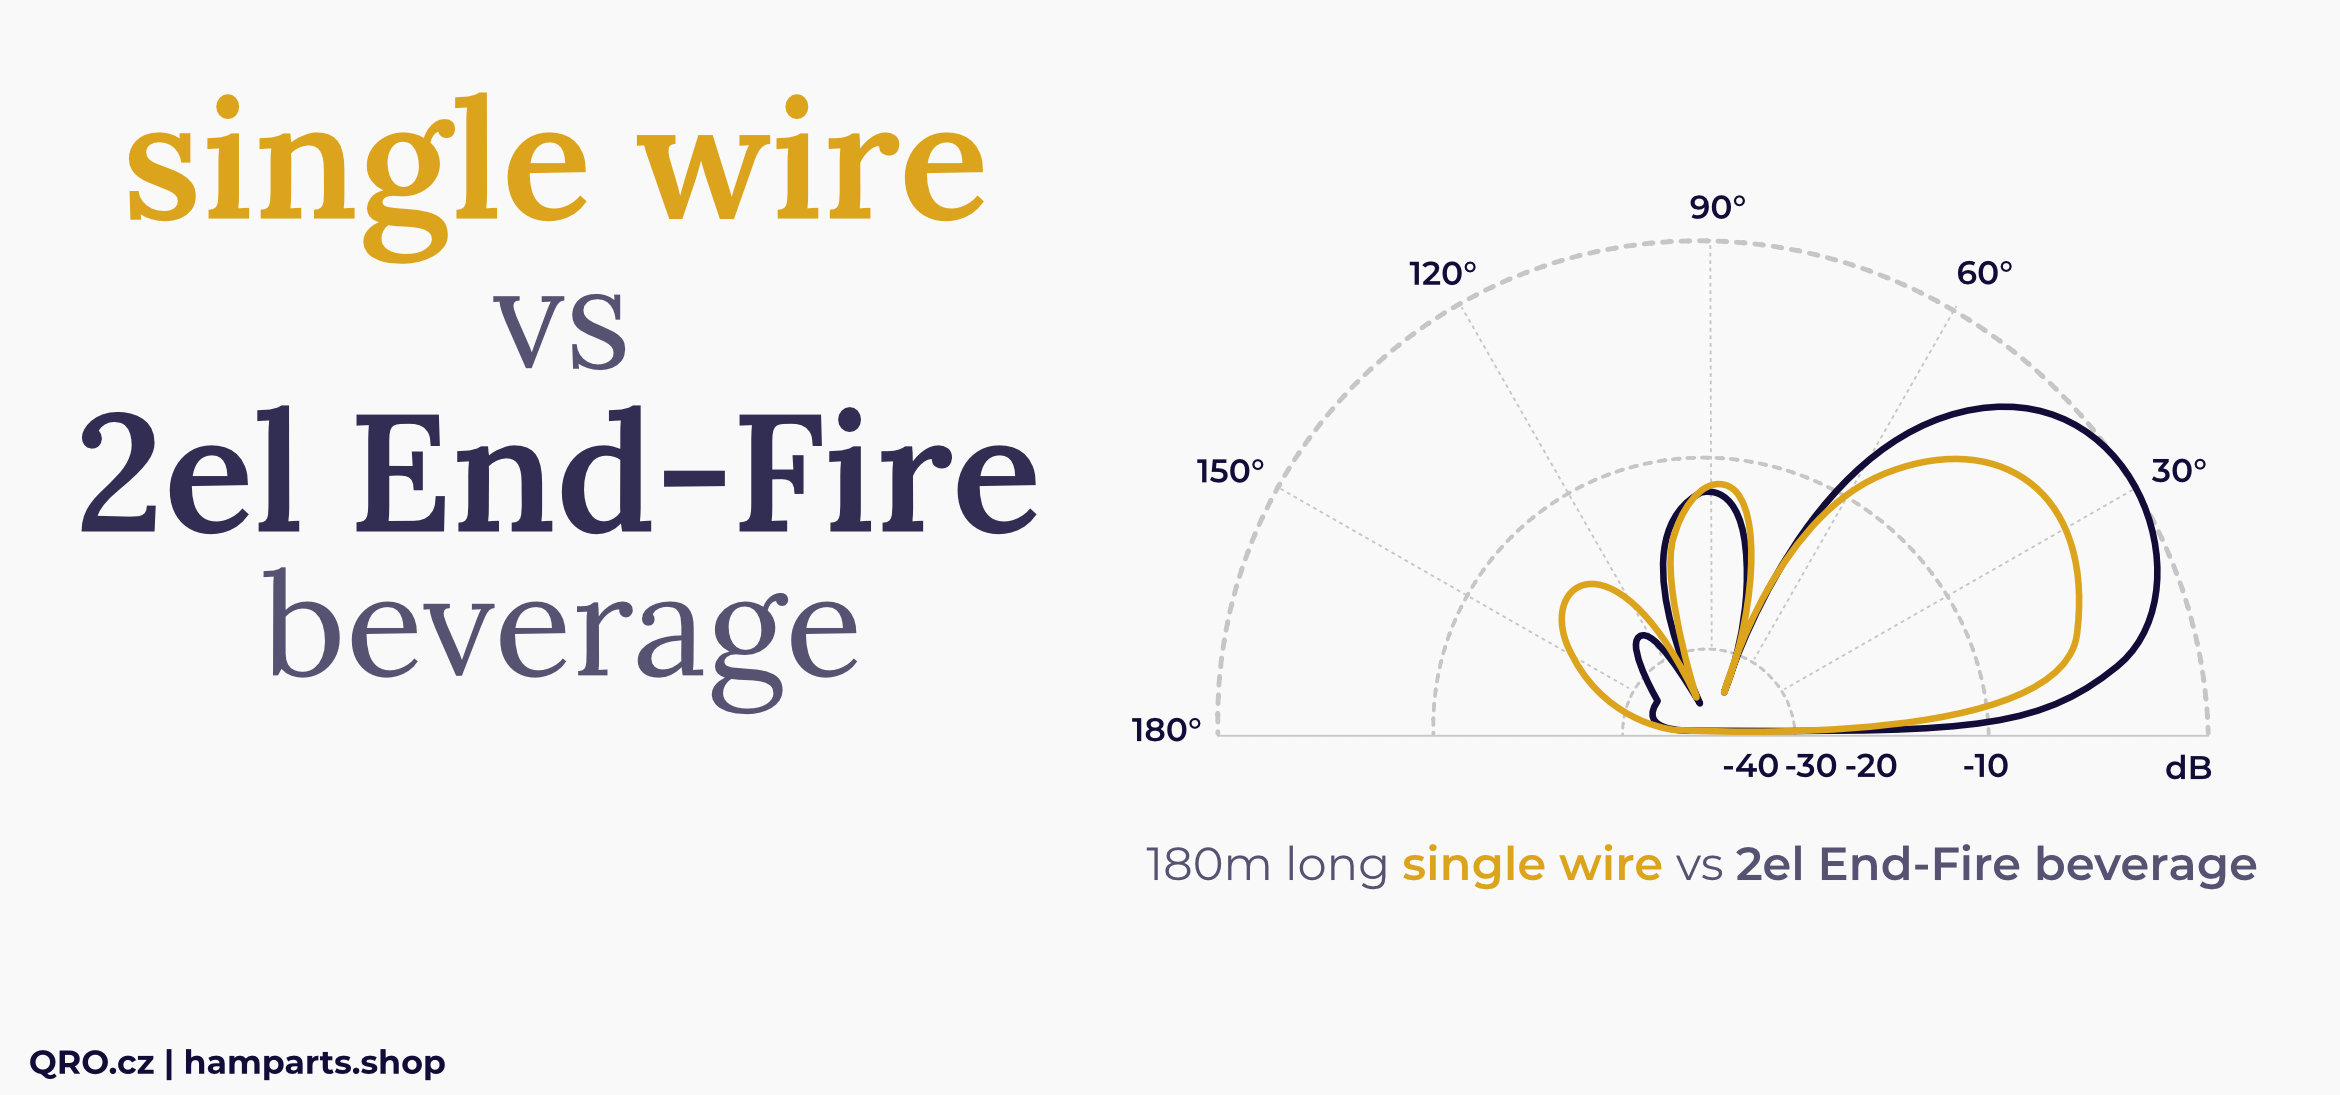 example comparisons 2el end fire single wire beverages by qro.cz hamparts.shop